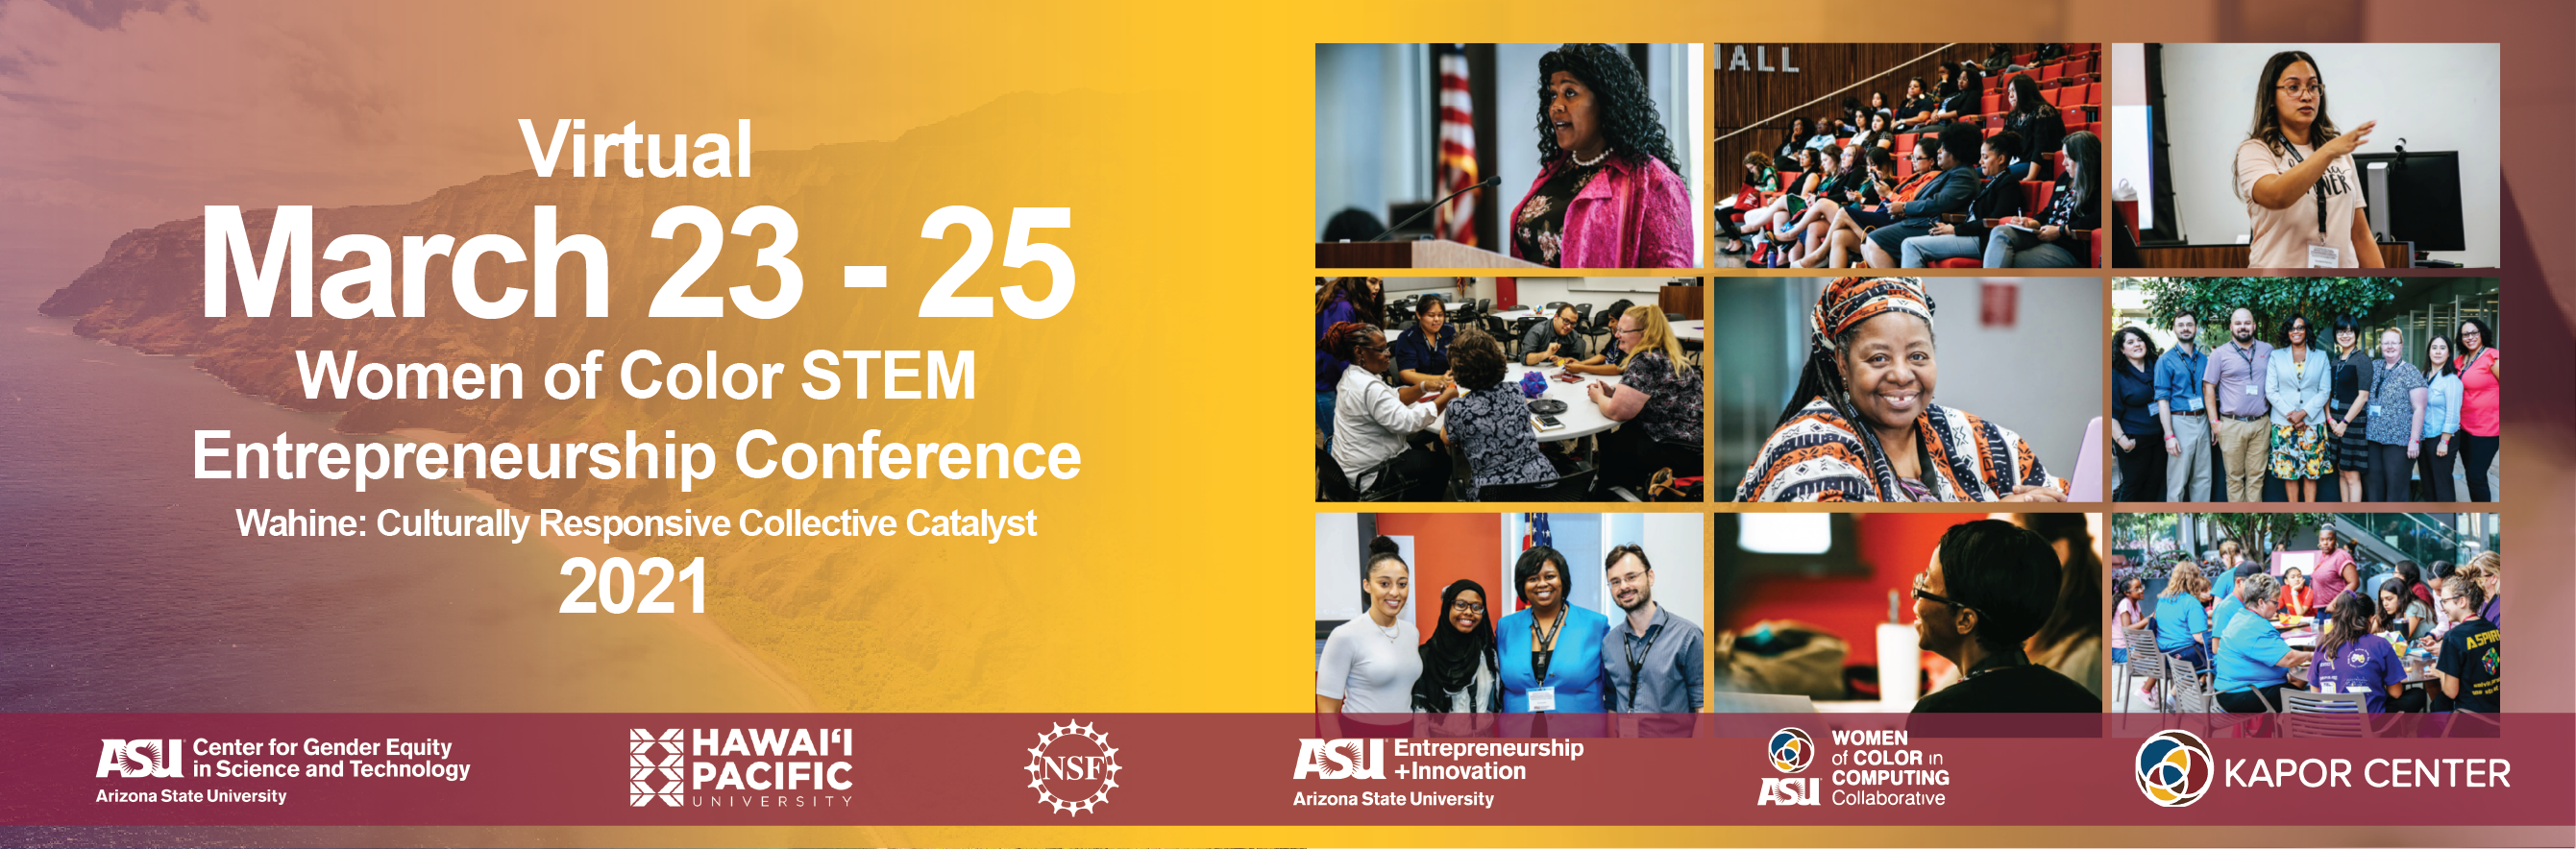 Women of Color STEM Entrepreneurship Conference 2021